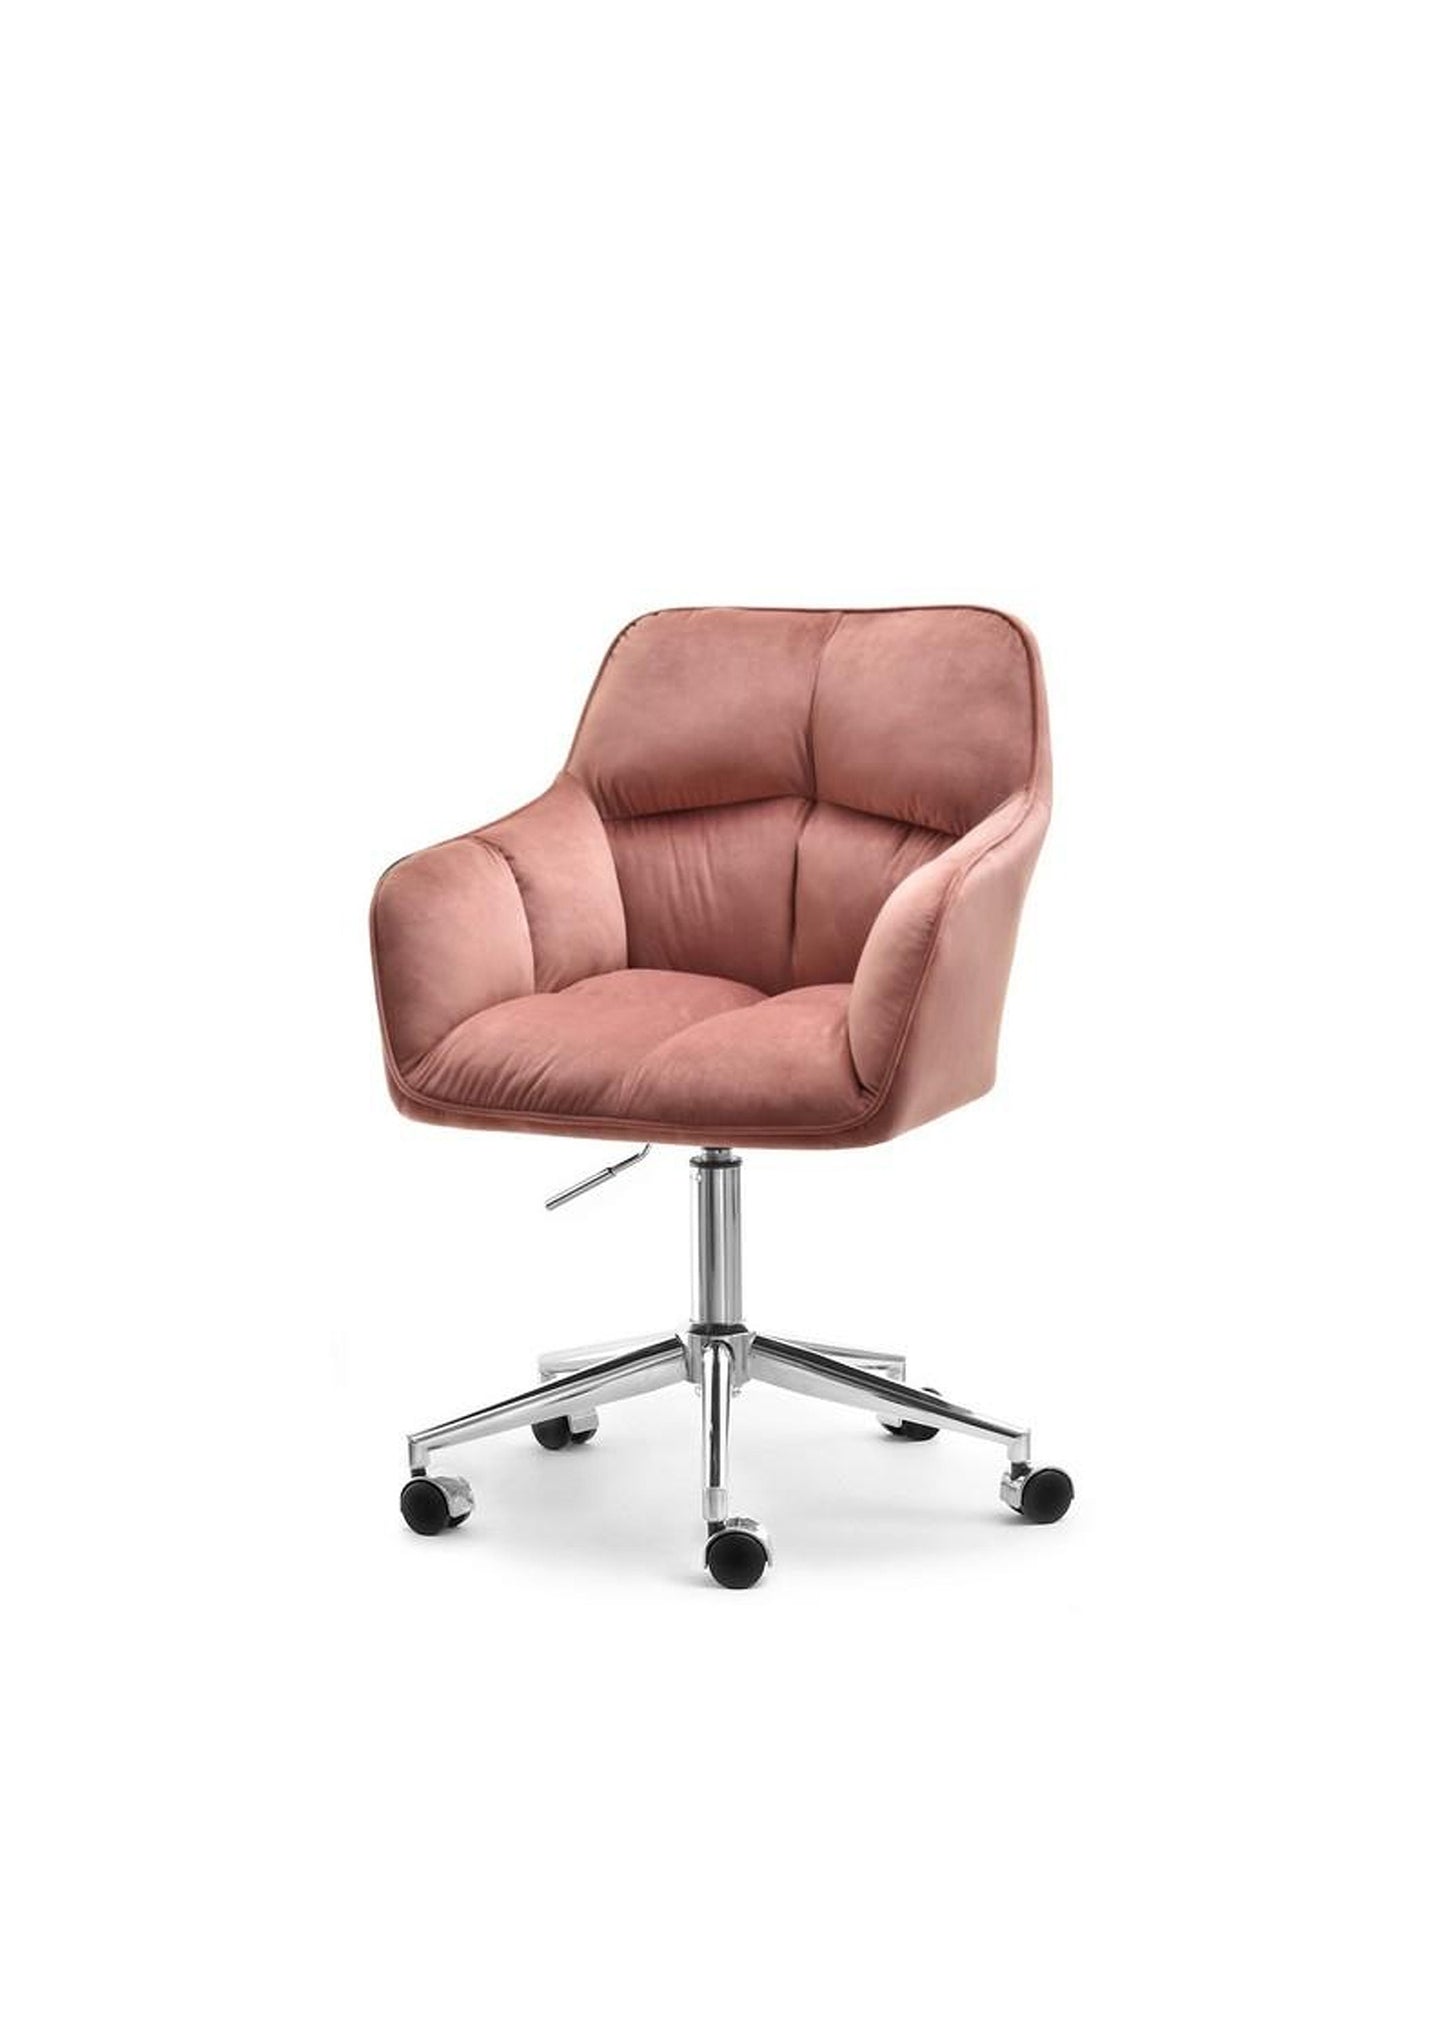 Designer velvet adjustable armchair office/desk chair with  swivel base in ink Blue / Green/ Beige / Pink/ Grey